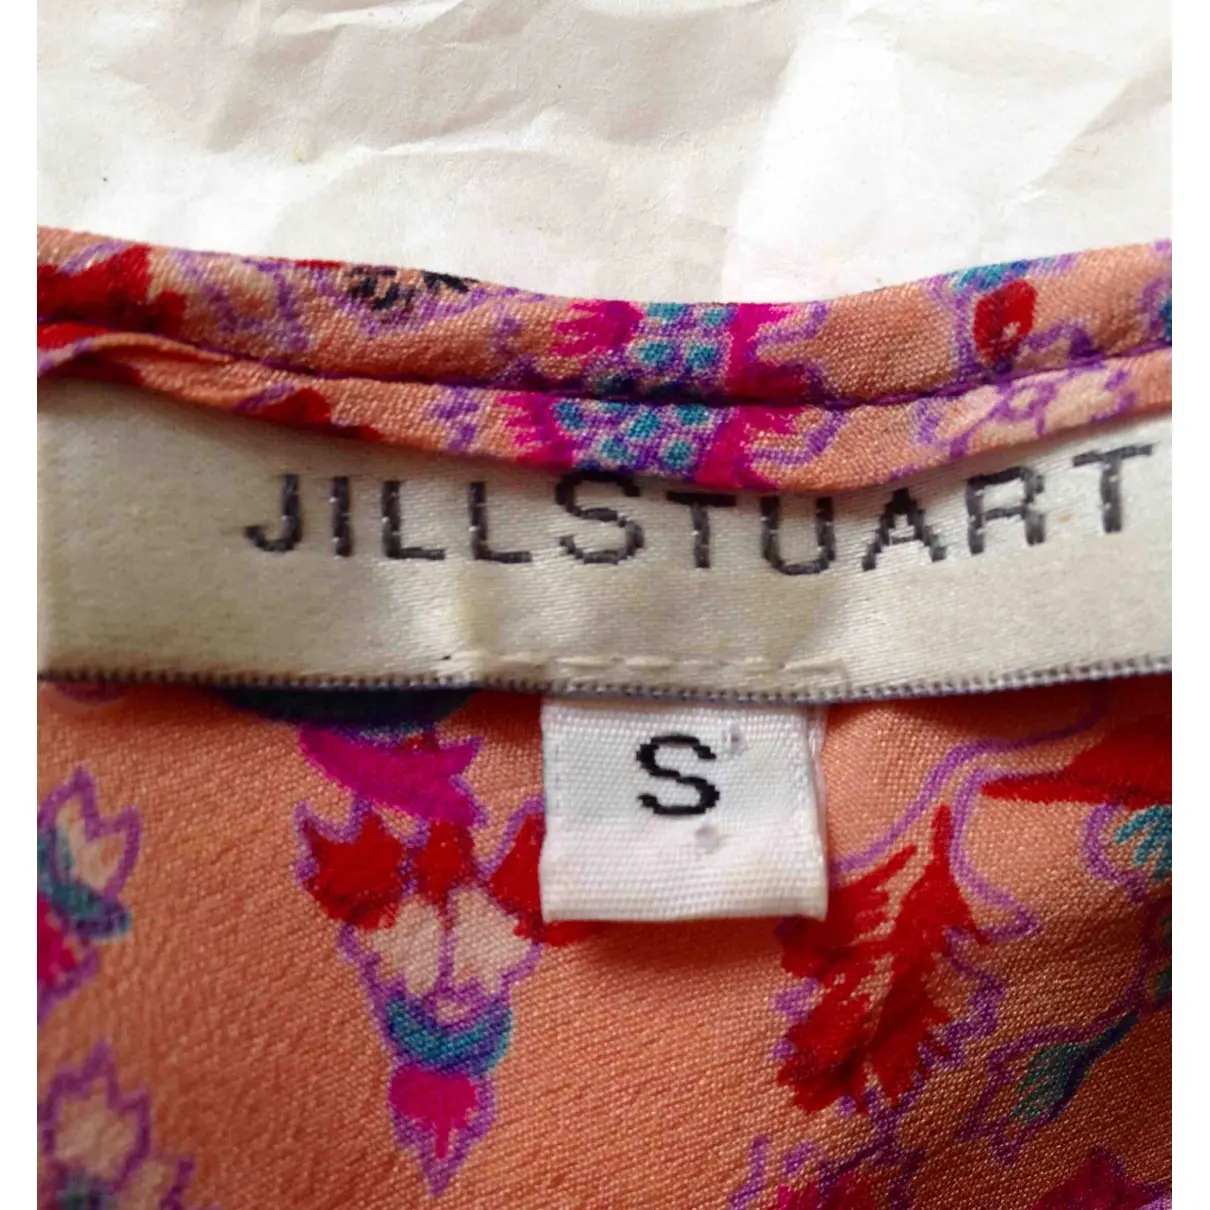 Buy Jill Stuart Silk mid-length dress online